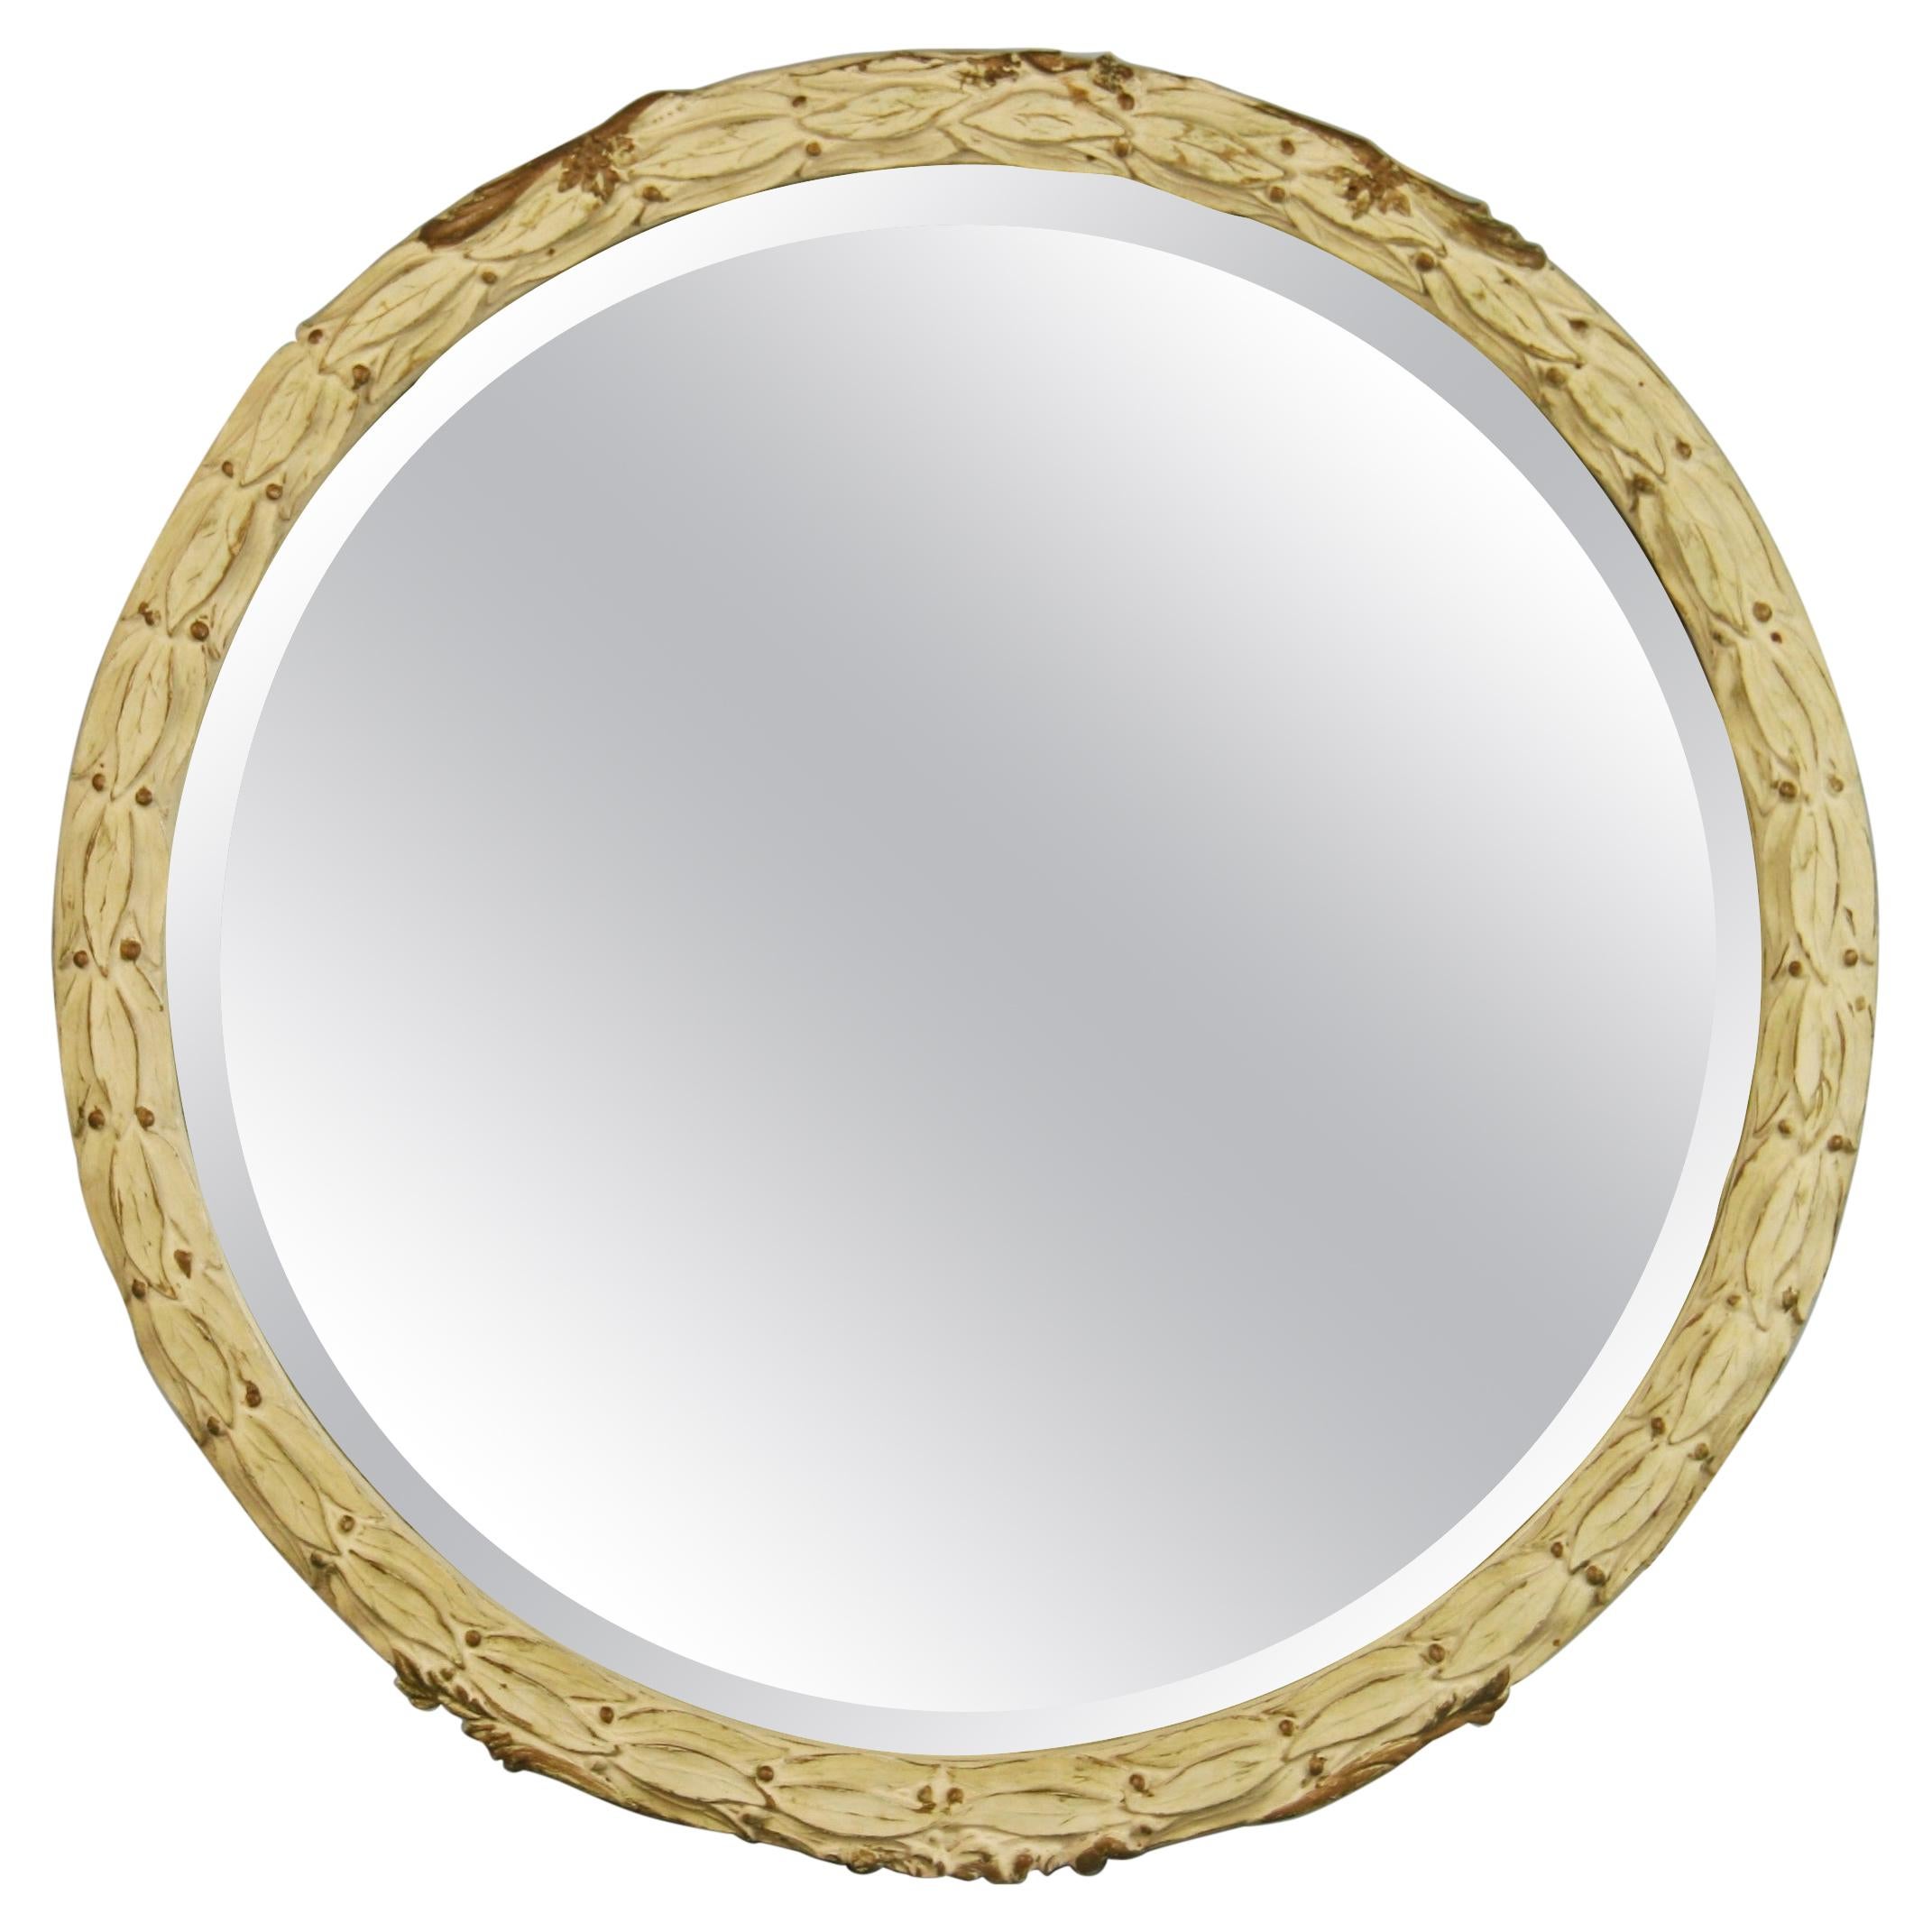 French Foliate Round Beveled Glass Mirror